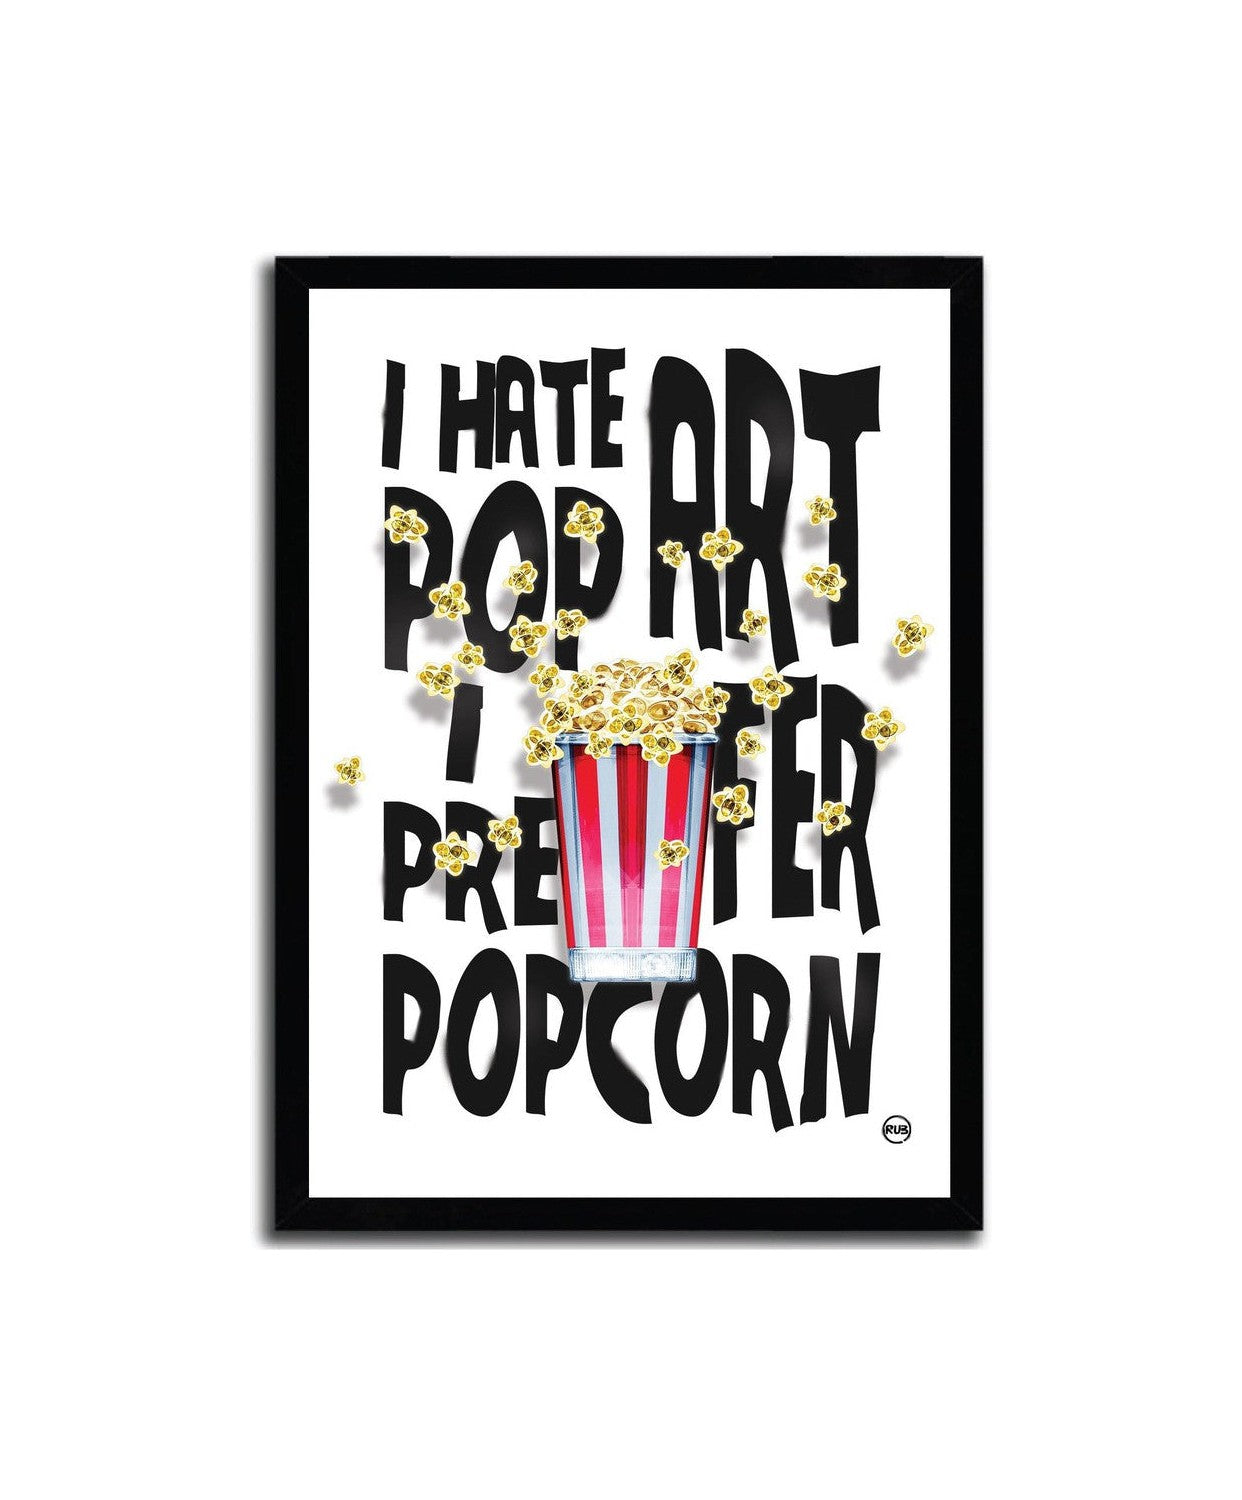 Affiche artprint popcorn par rubant